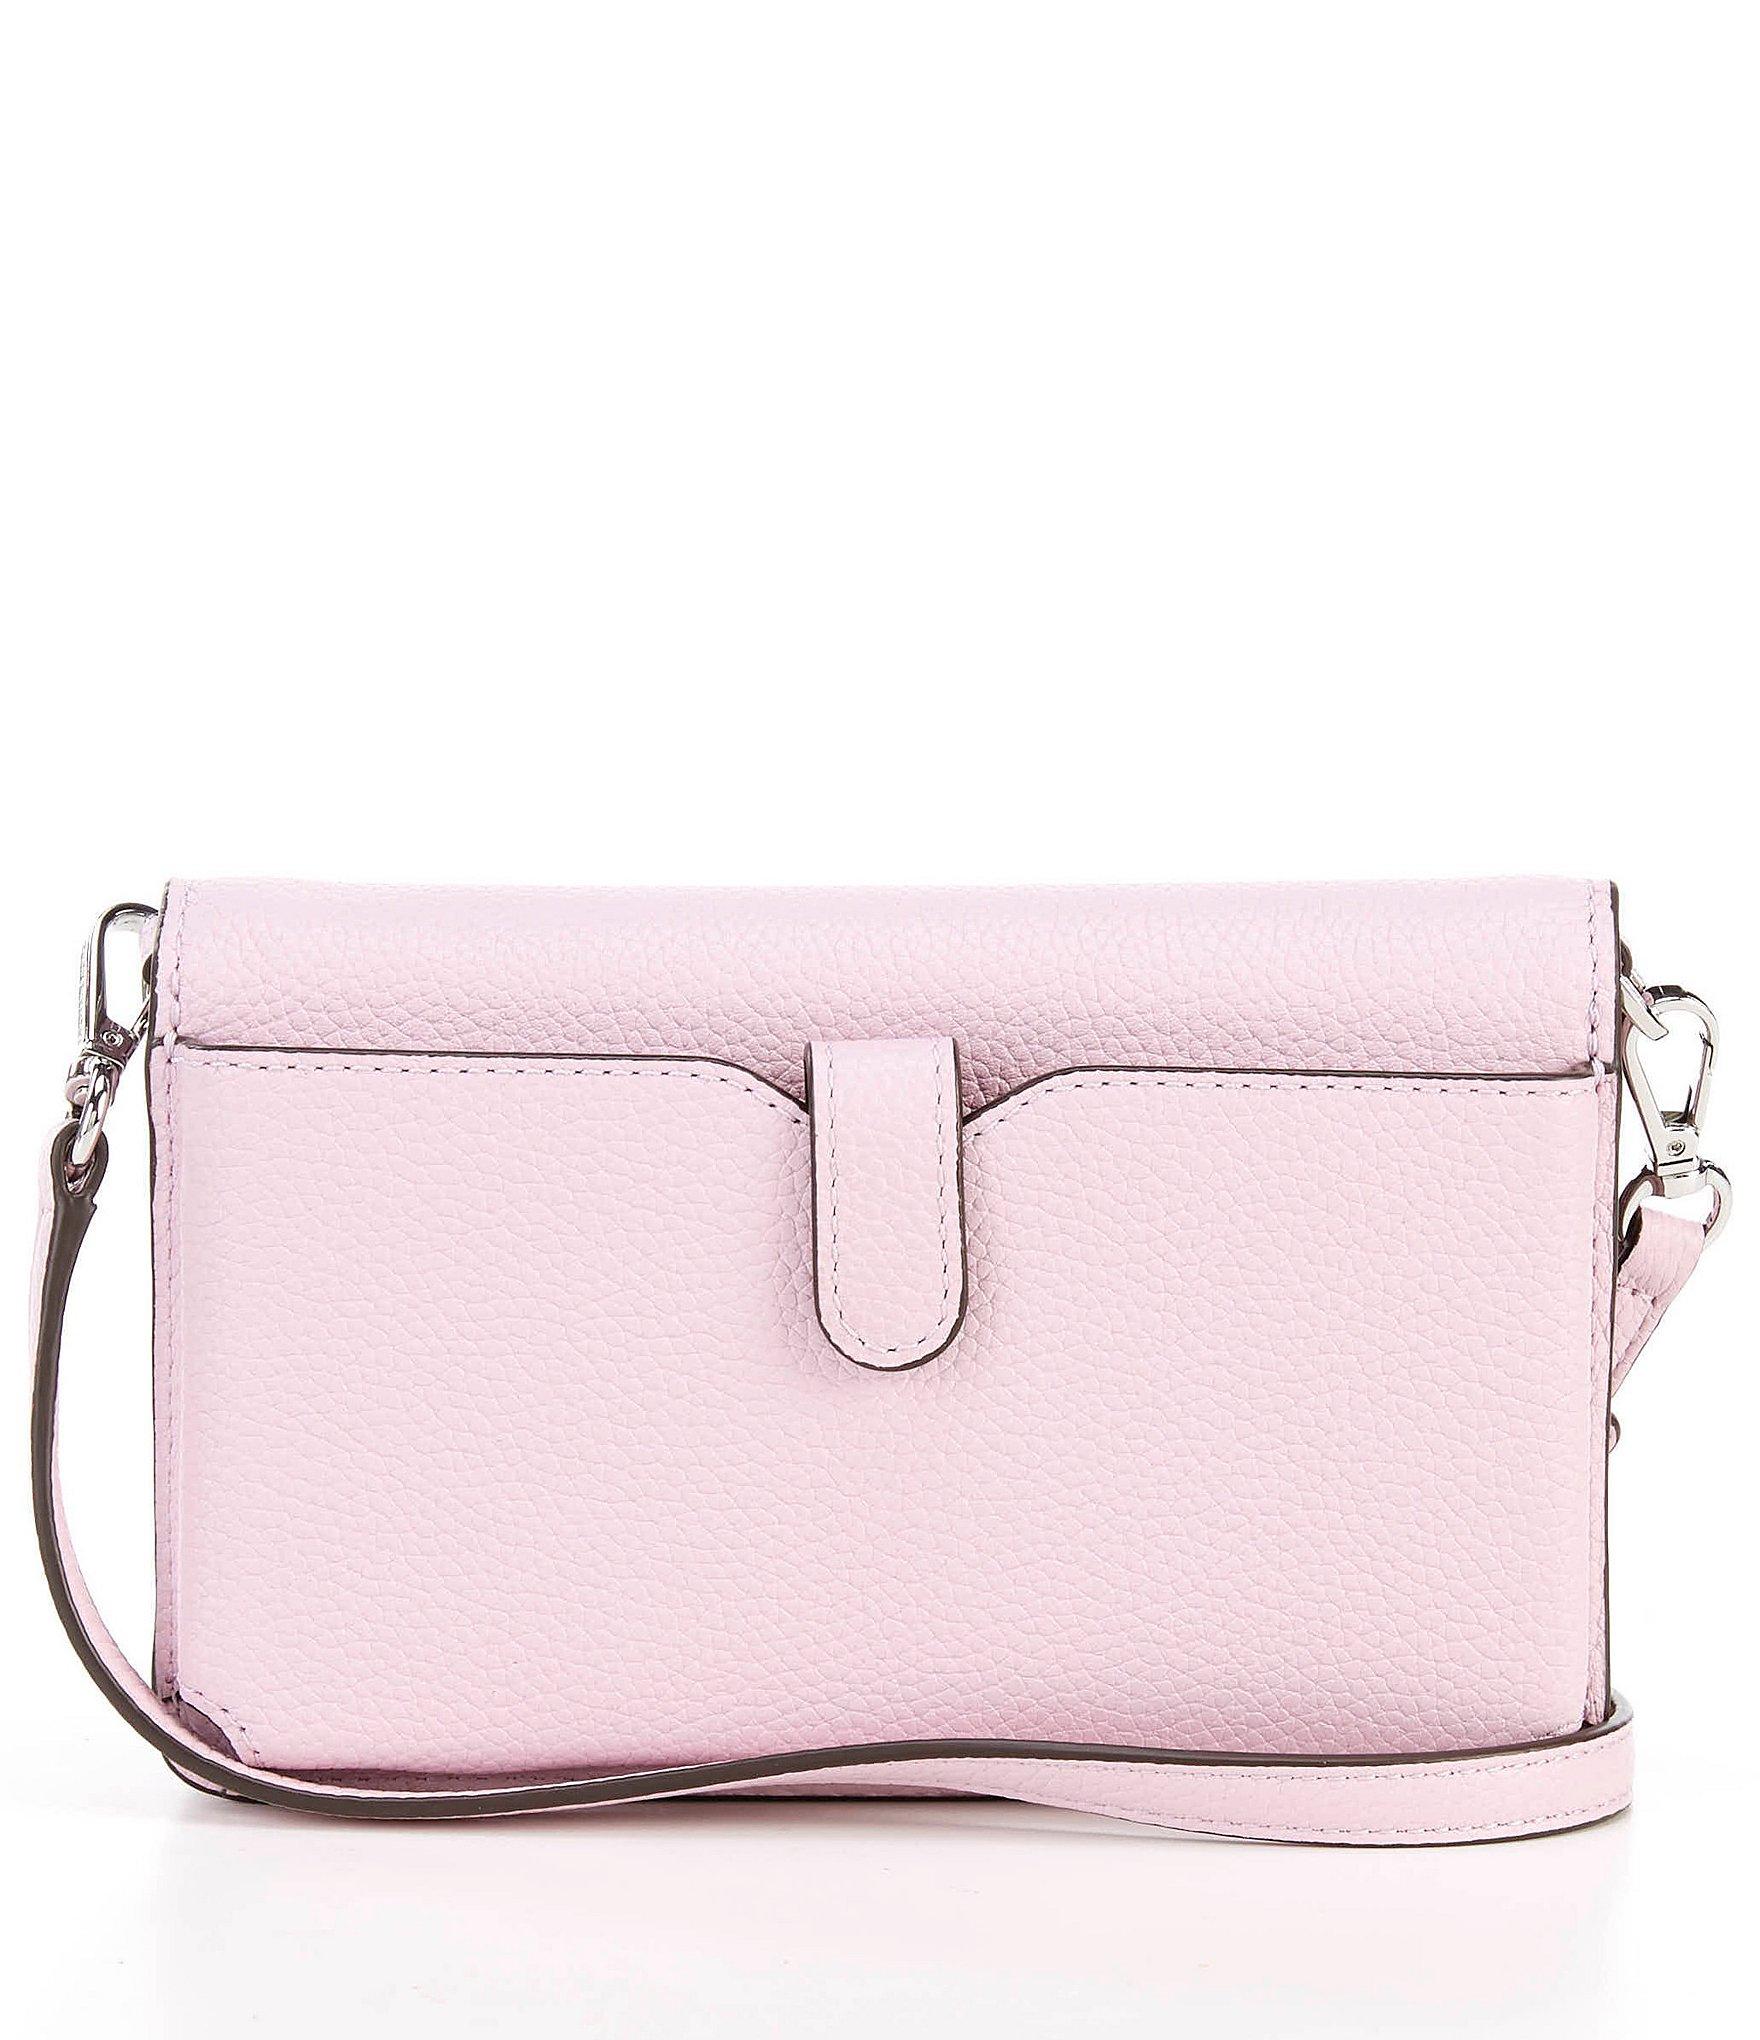 Michael Kors Michael Pebble Leather Phone Crossbody Wallet in Pink - Lyst